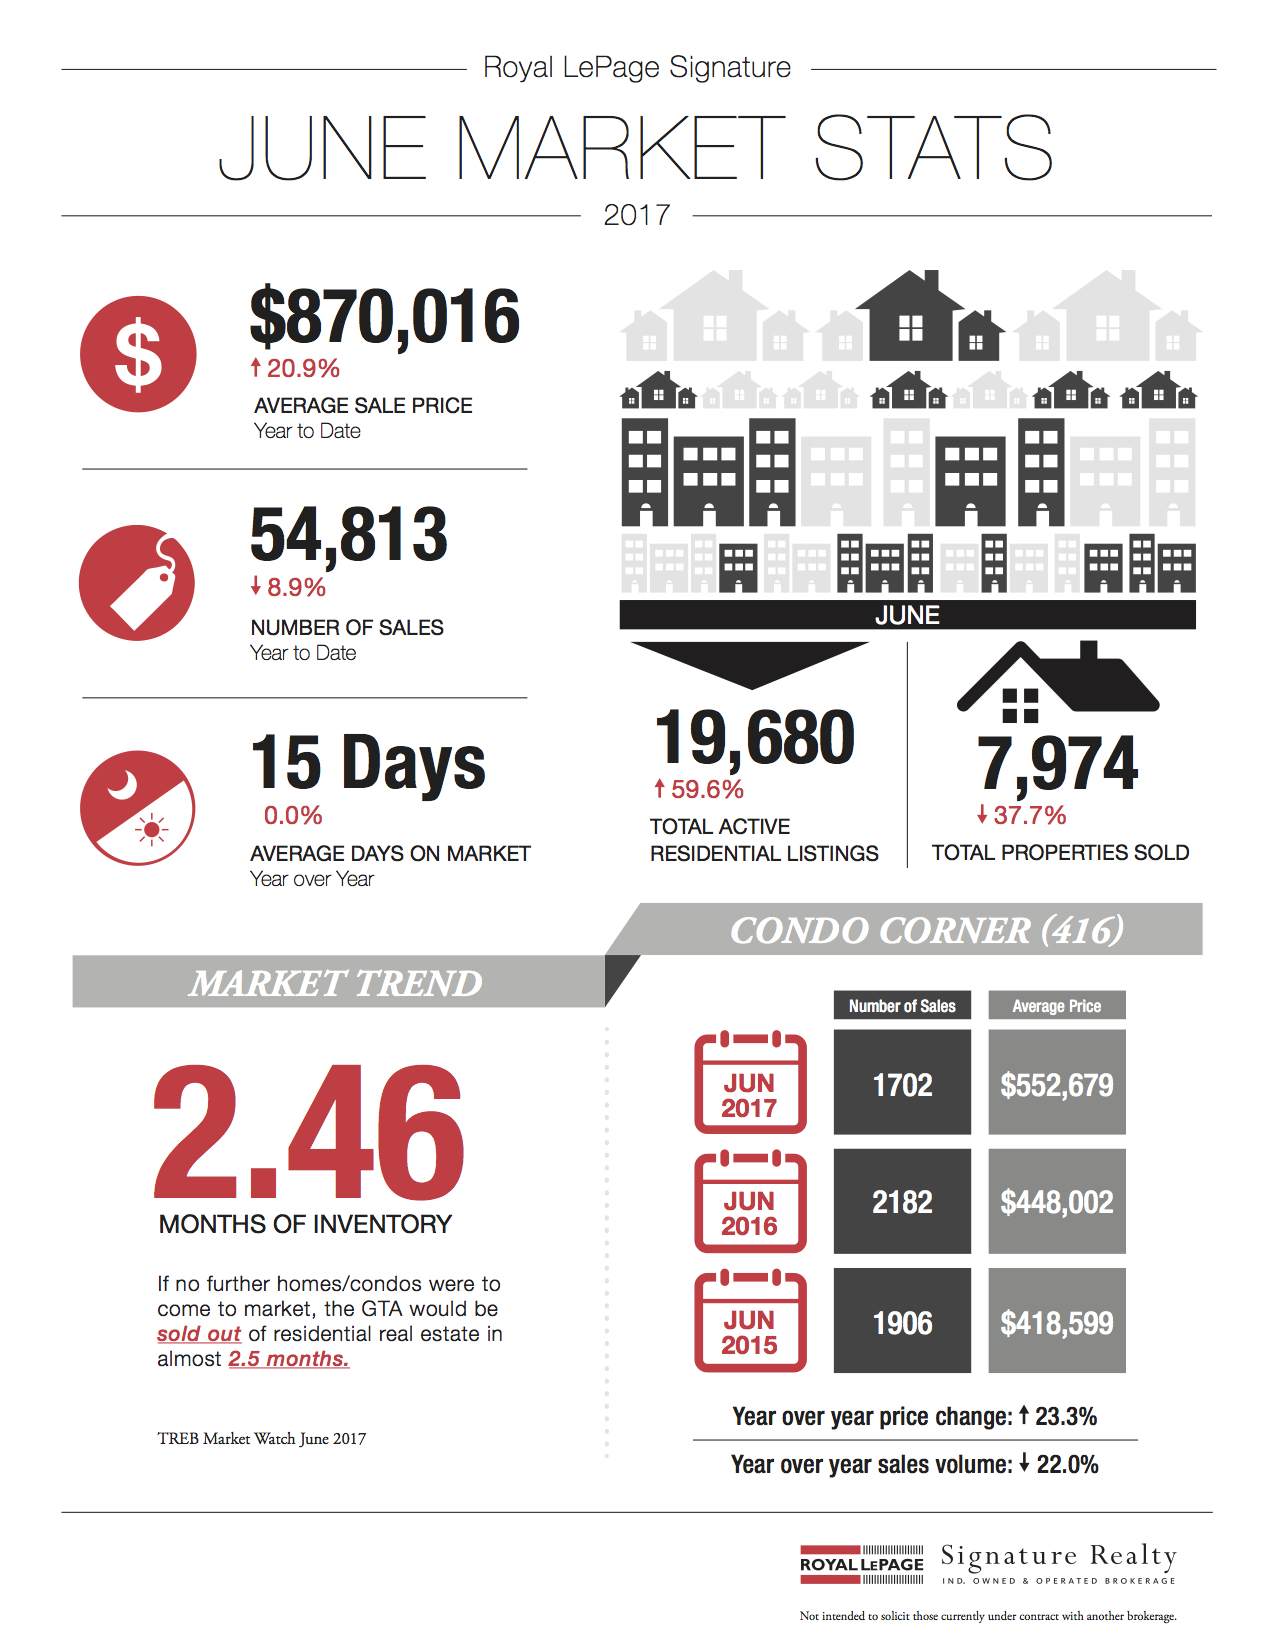 June 2017 Market Stats: Infographic & Report Photo